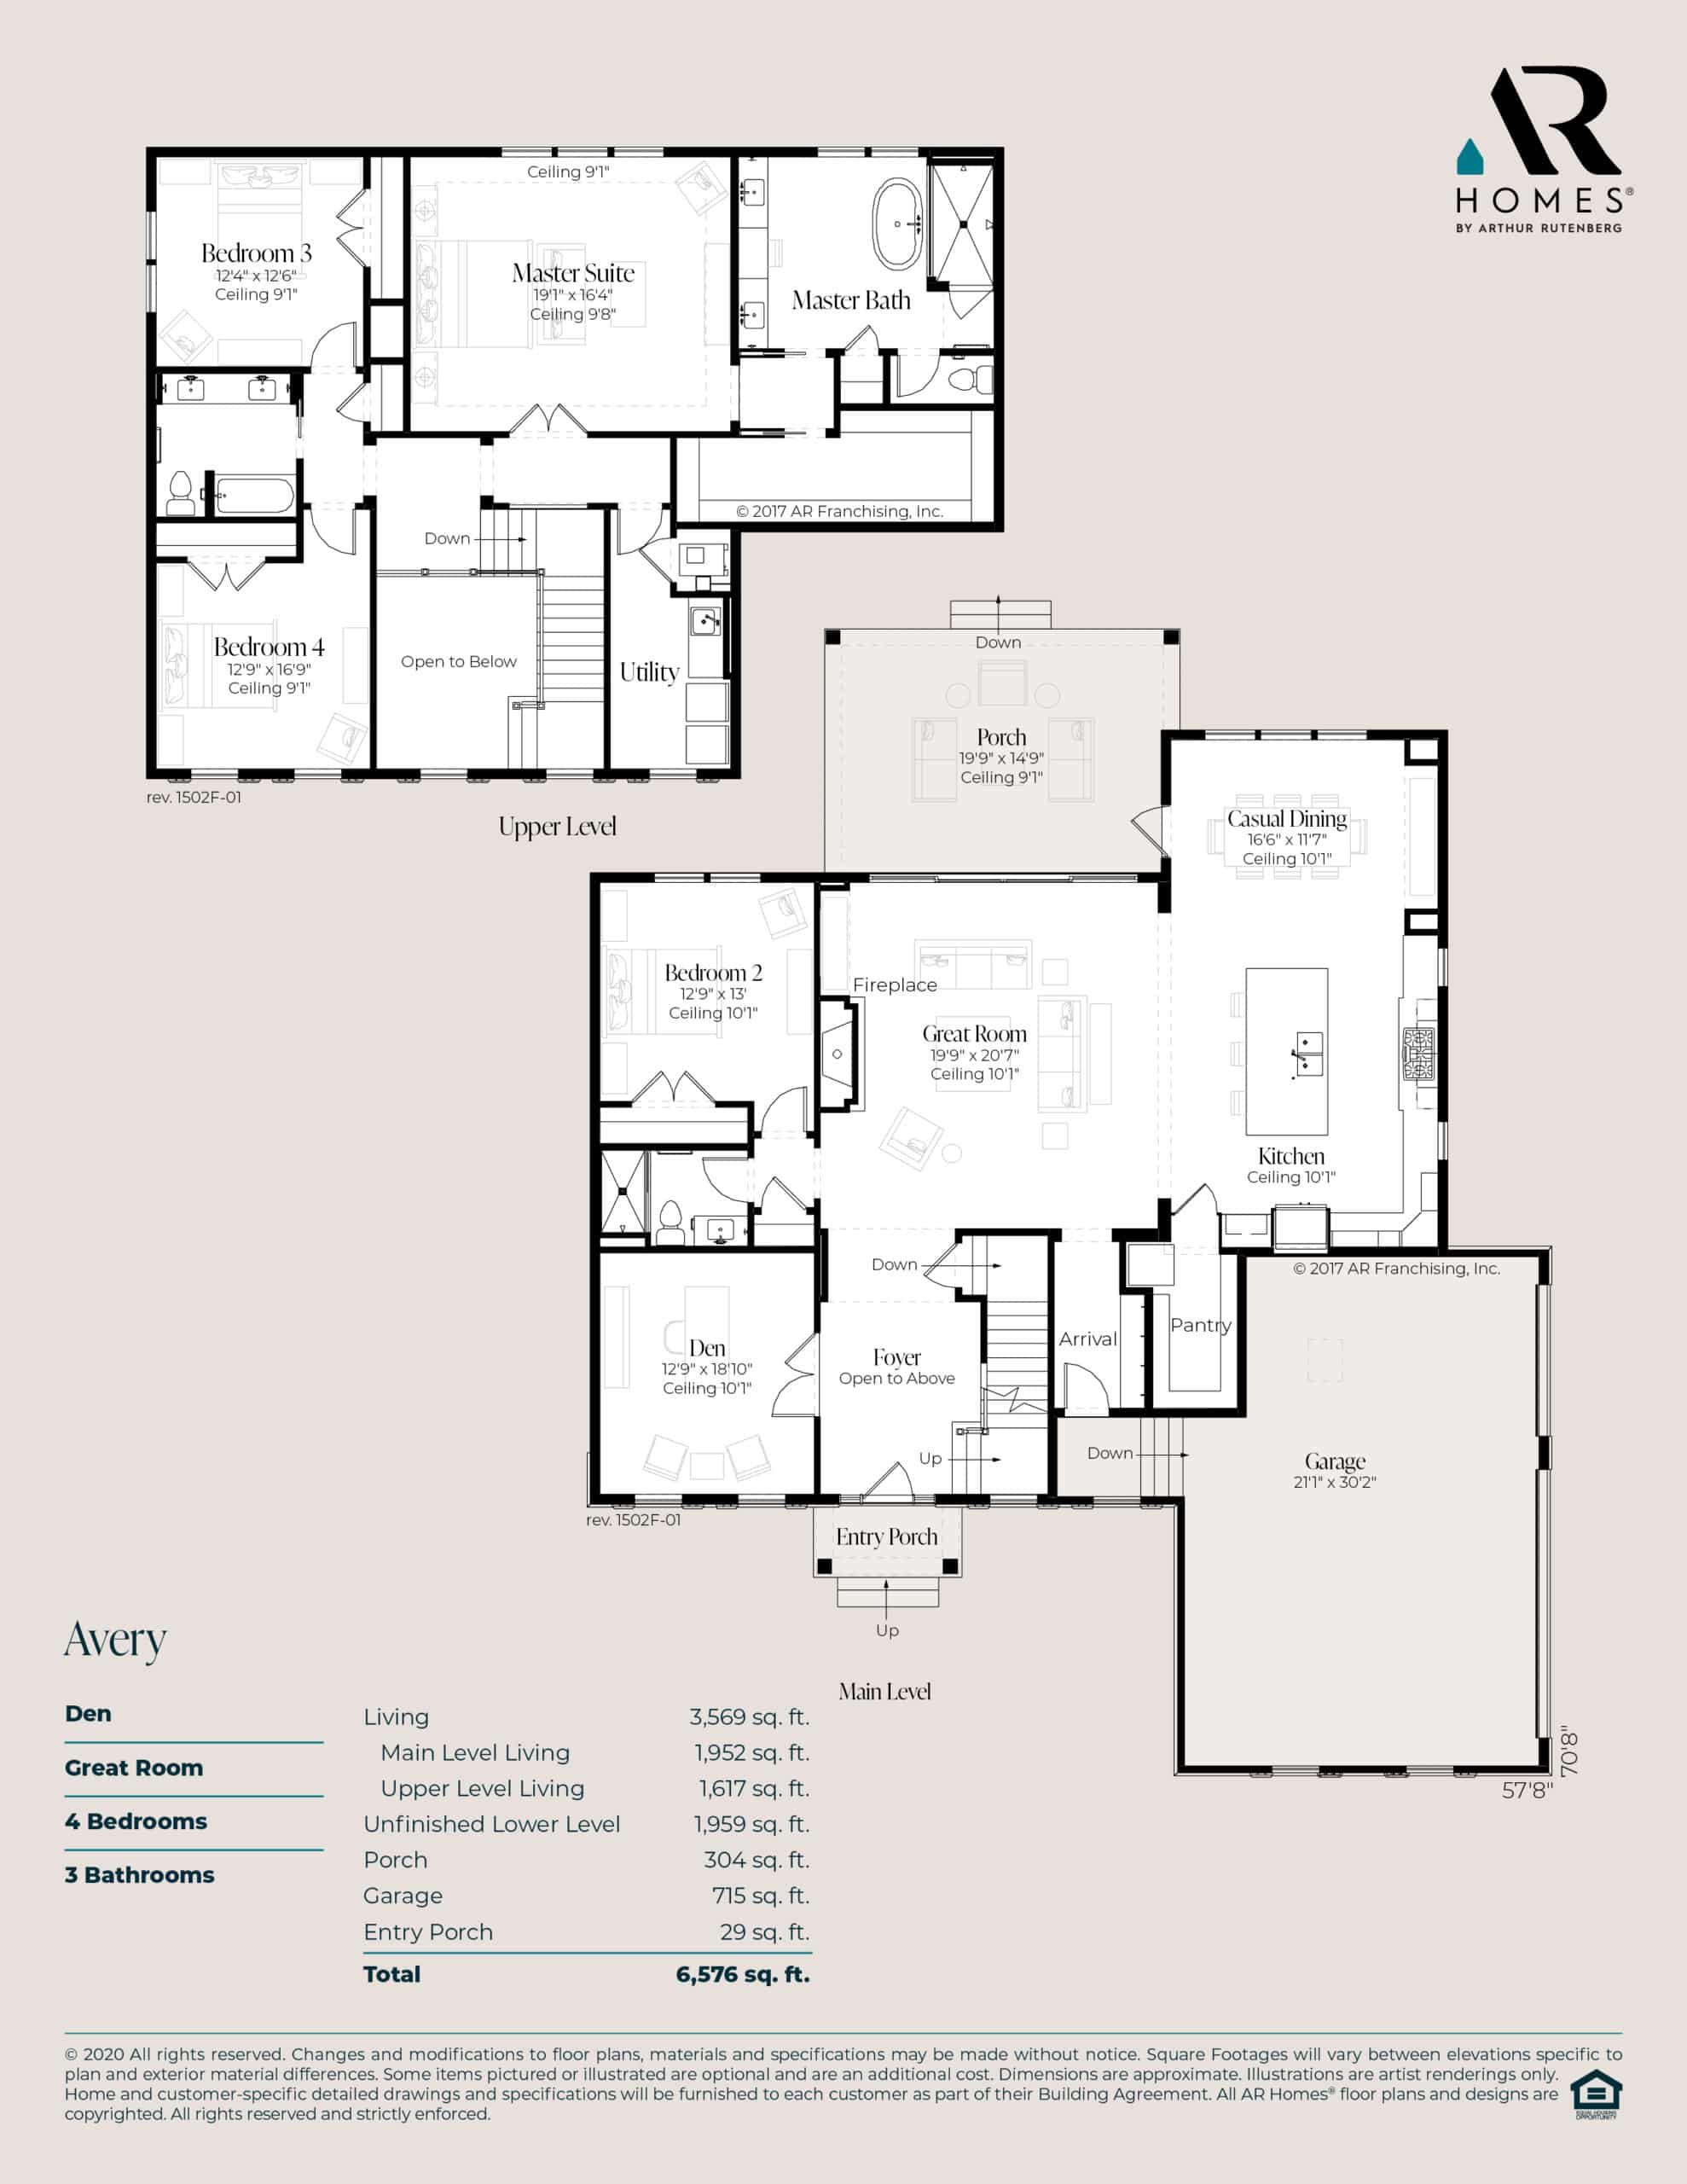 The Avery Plan Ar Homes By Arthur Rutenberg